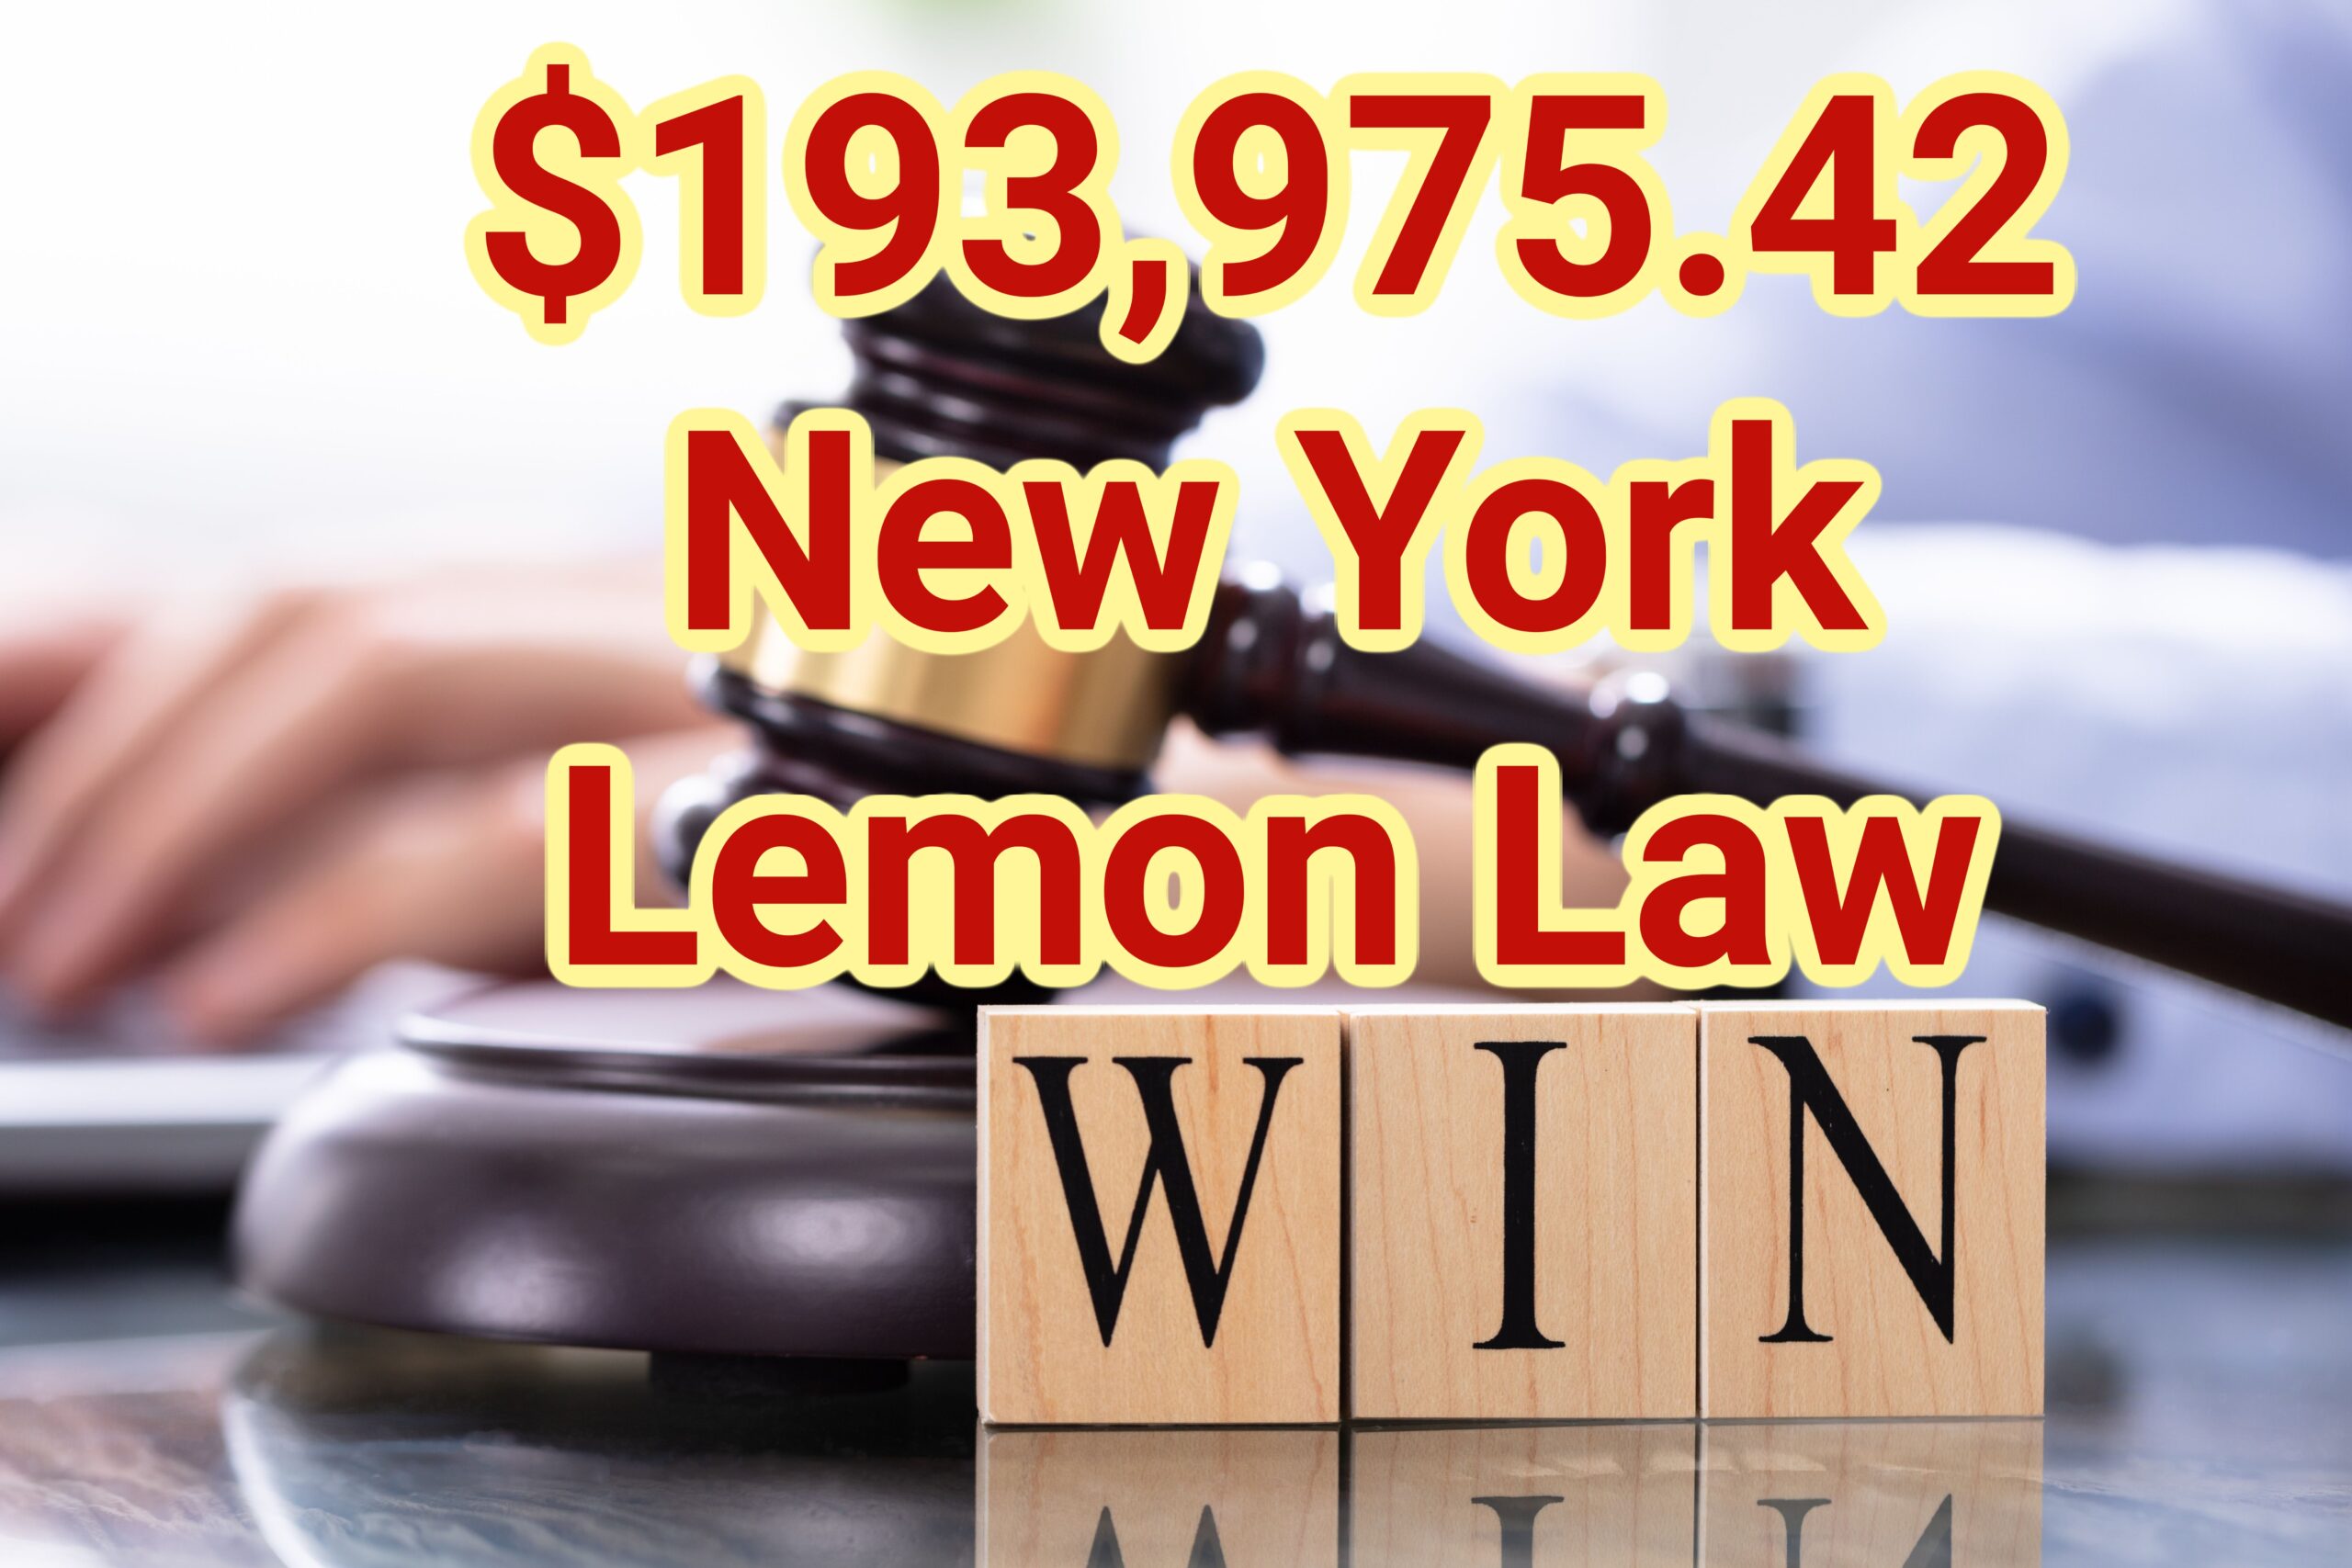 New York Lemon Law Win